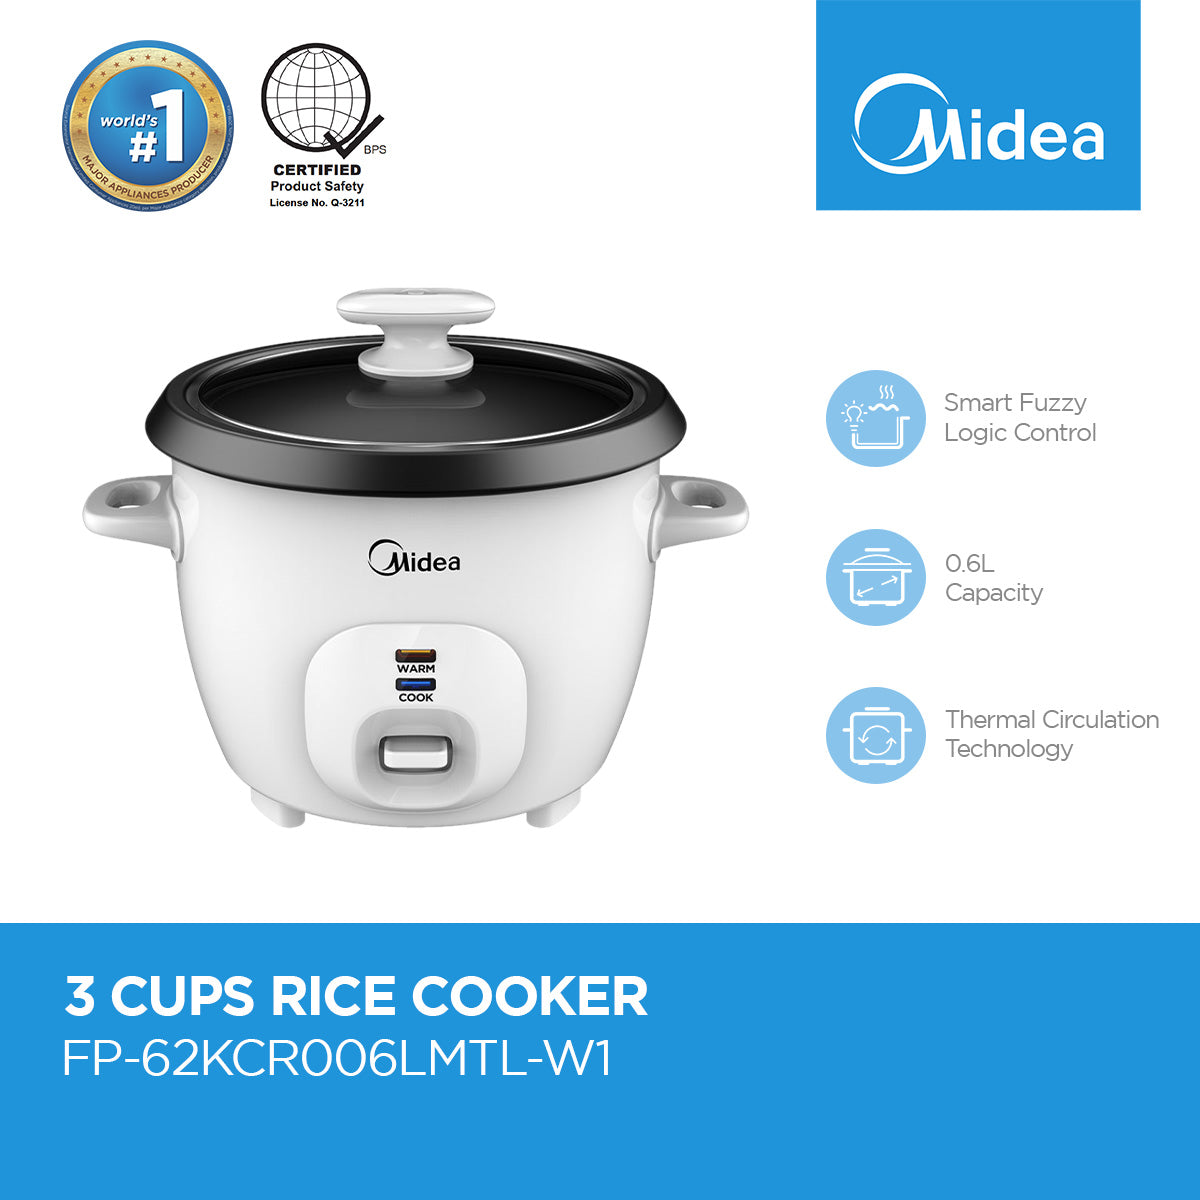 Midea 3 Cups Rice Cooker